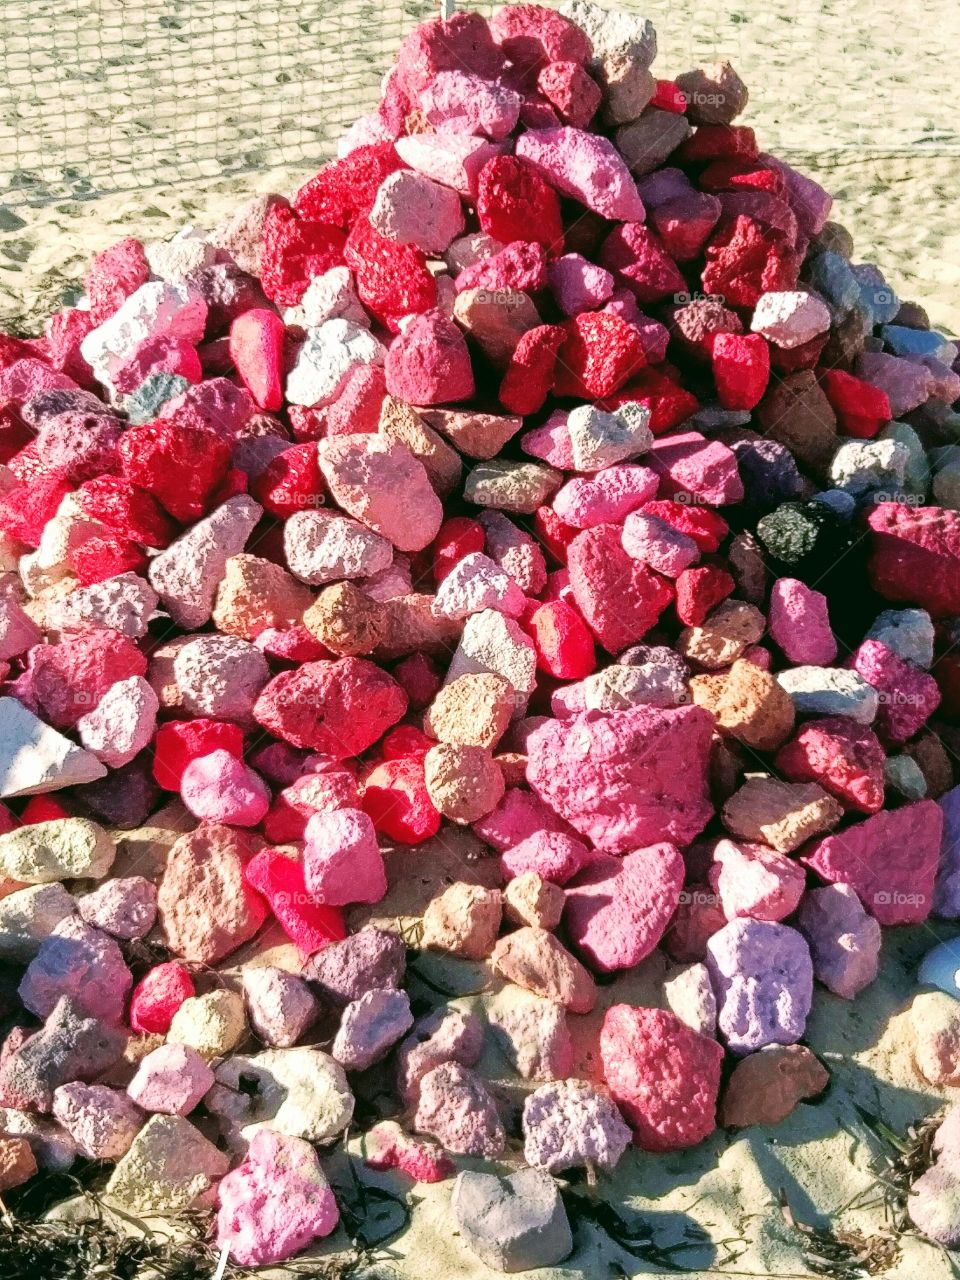 Piles of pink stones